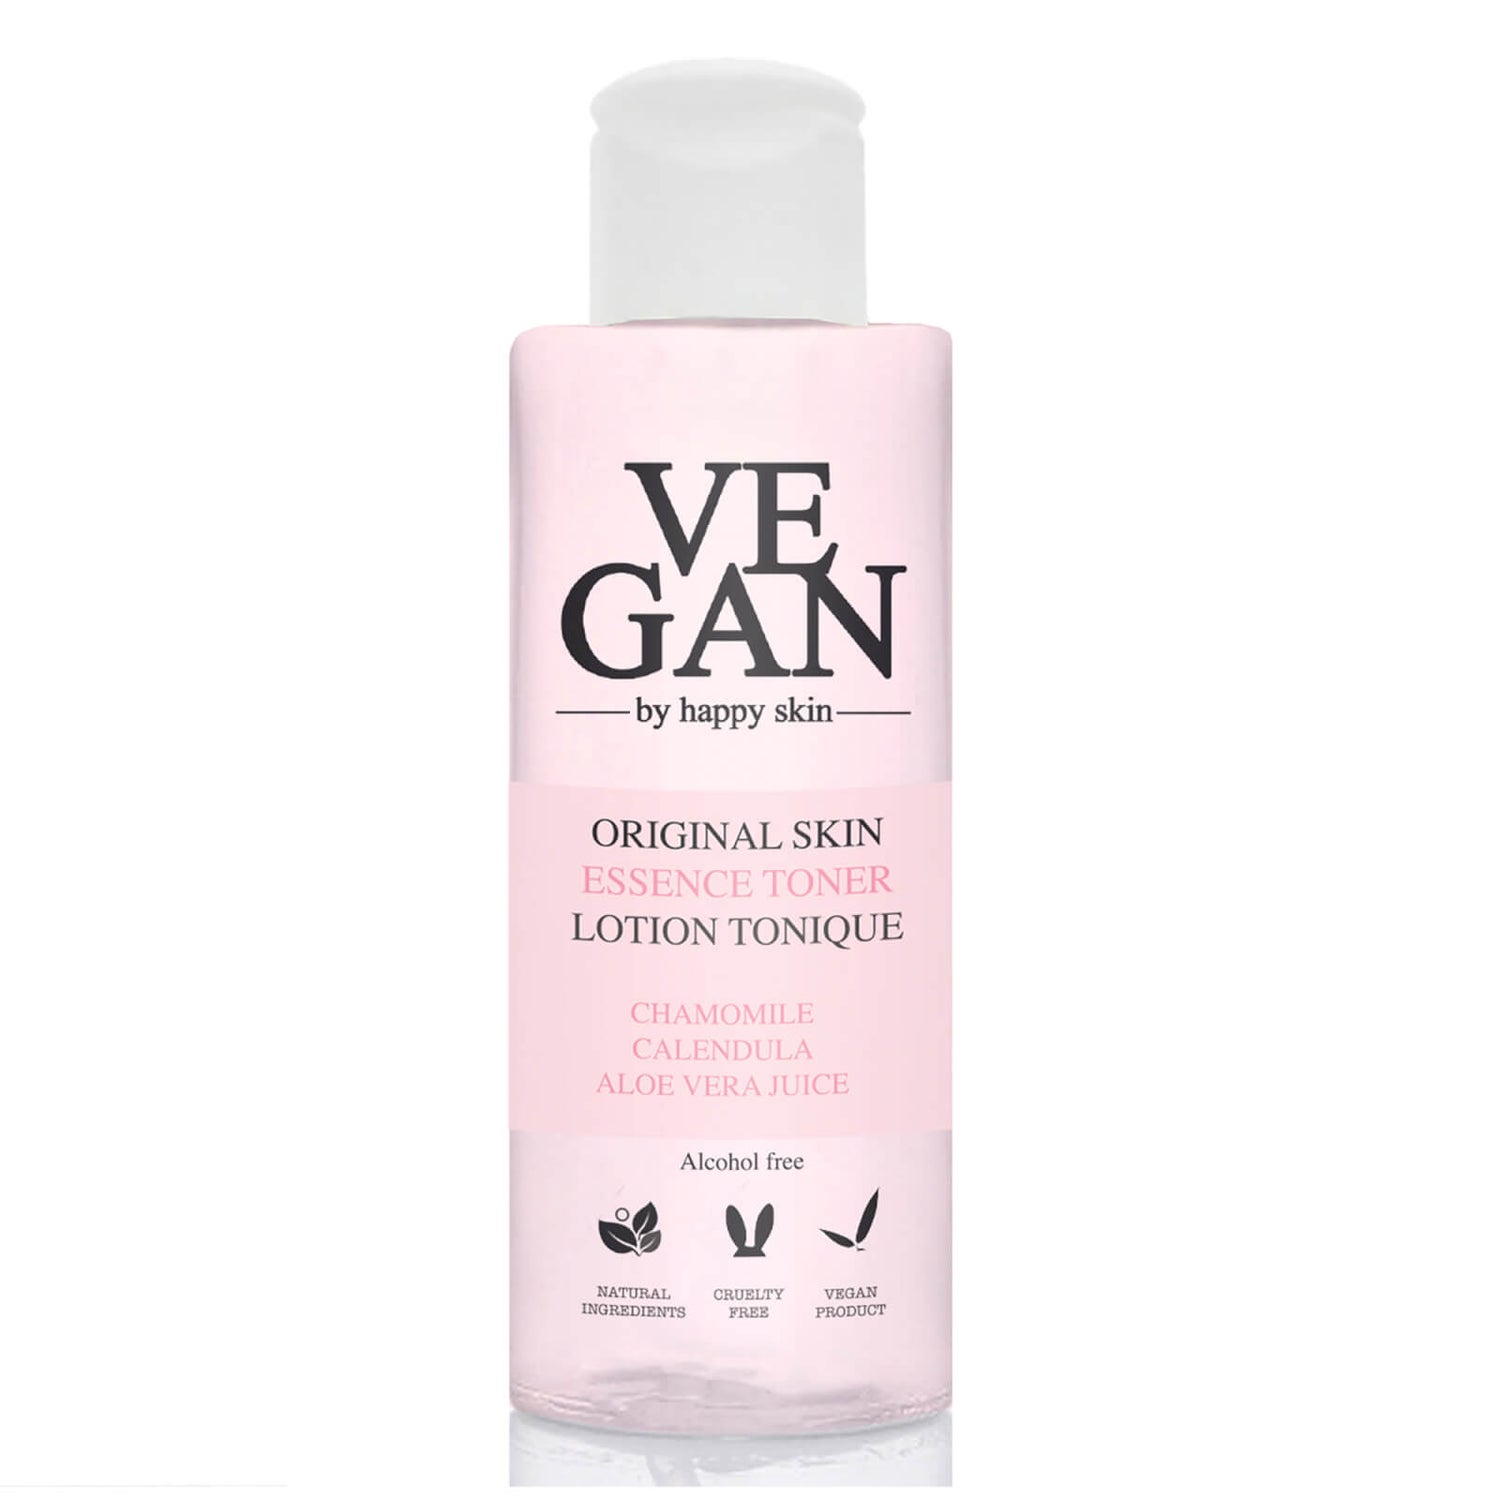 Vegan by happy skin Original Skin Essence Toner | GLOSSYBOX FR